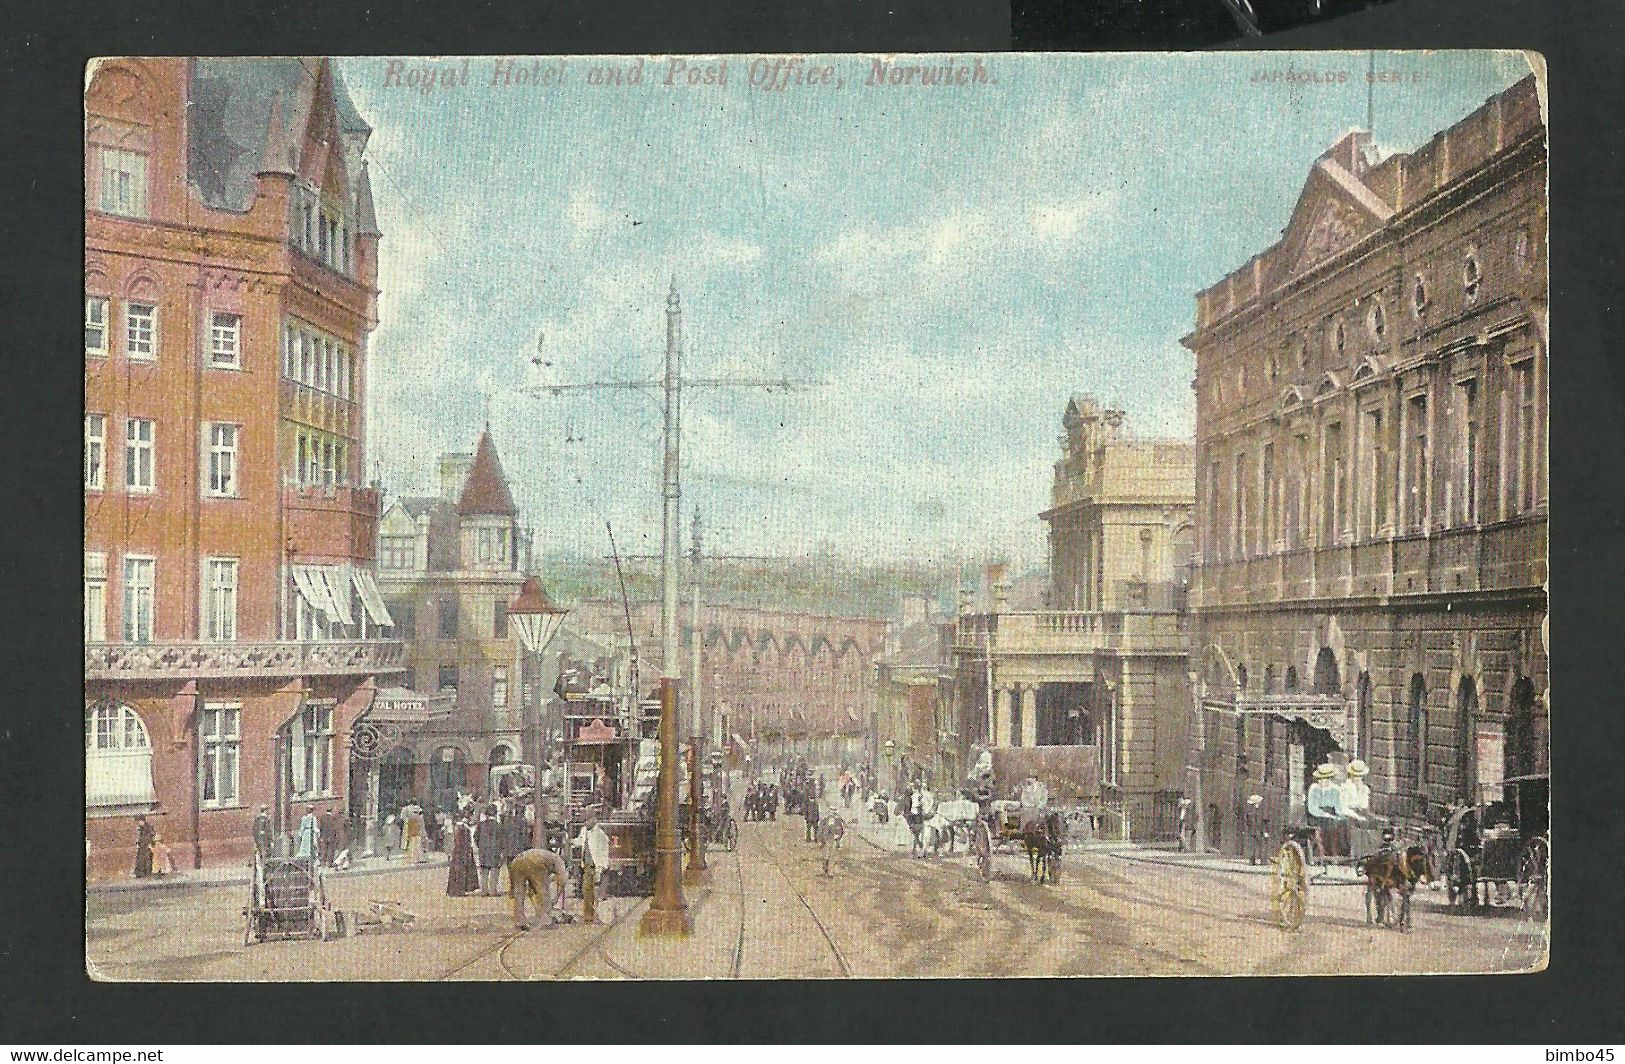 UK  /  ENGLAND  -- Norwich  -  Royal Hotel And Post Office -   Norwich   1906  /  JARROLDS SERIE - Norwich